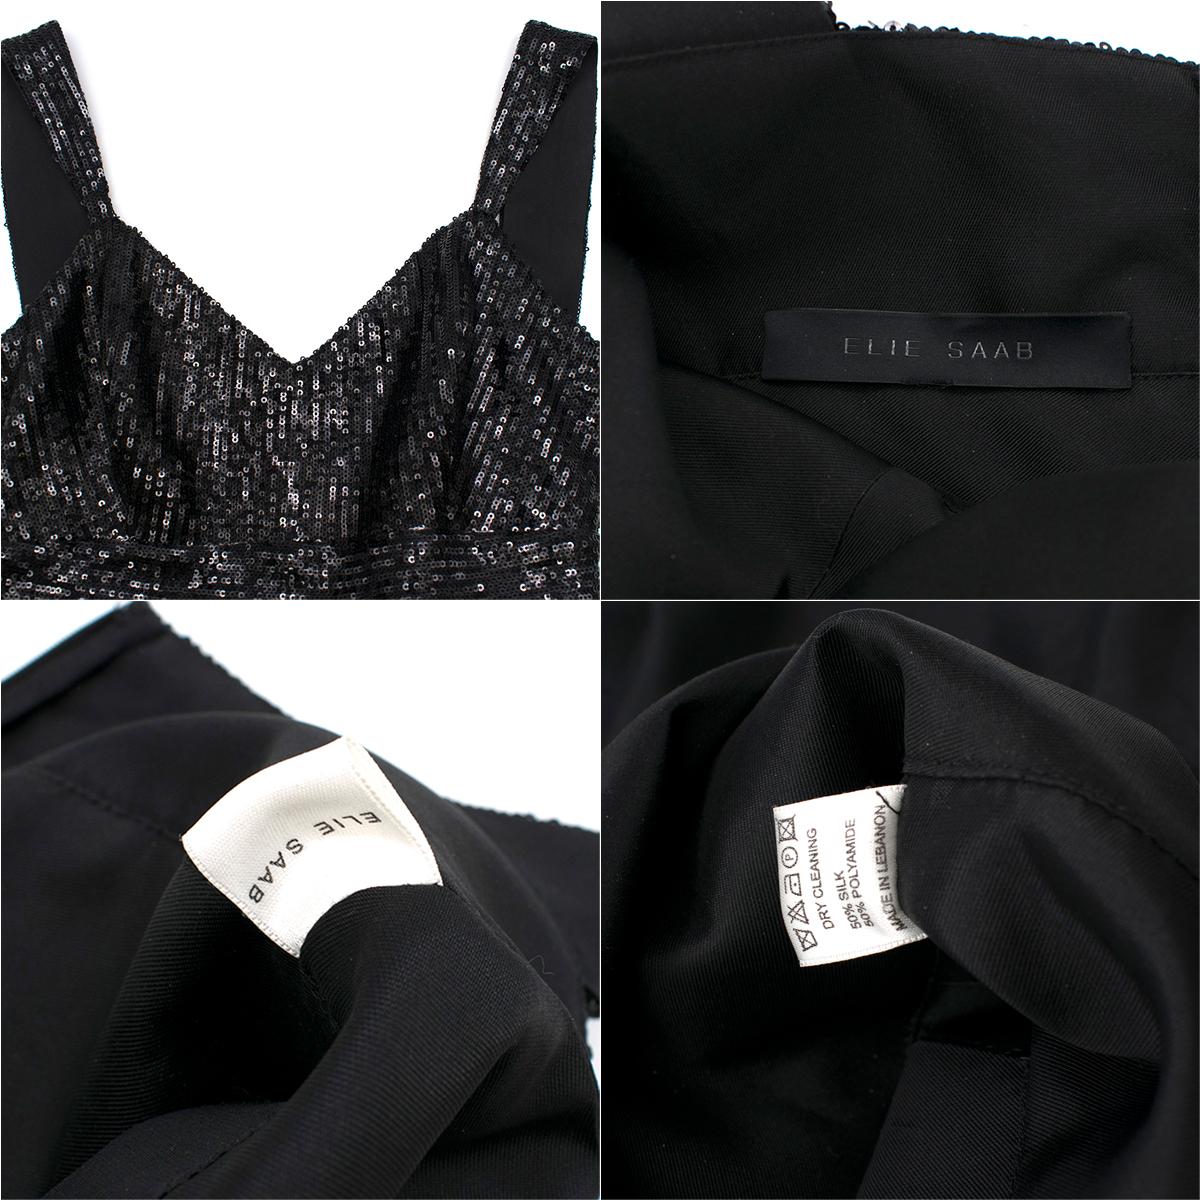 Elie Saab Black Sequin & Lace Layered Mini Dress estimated size XS 4